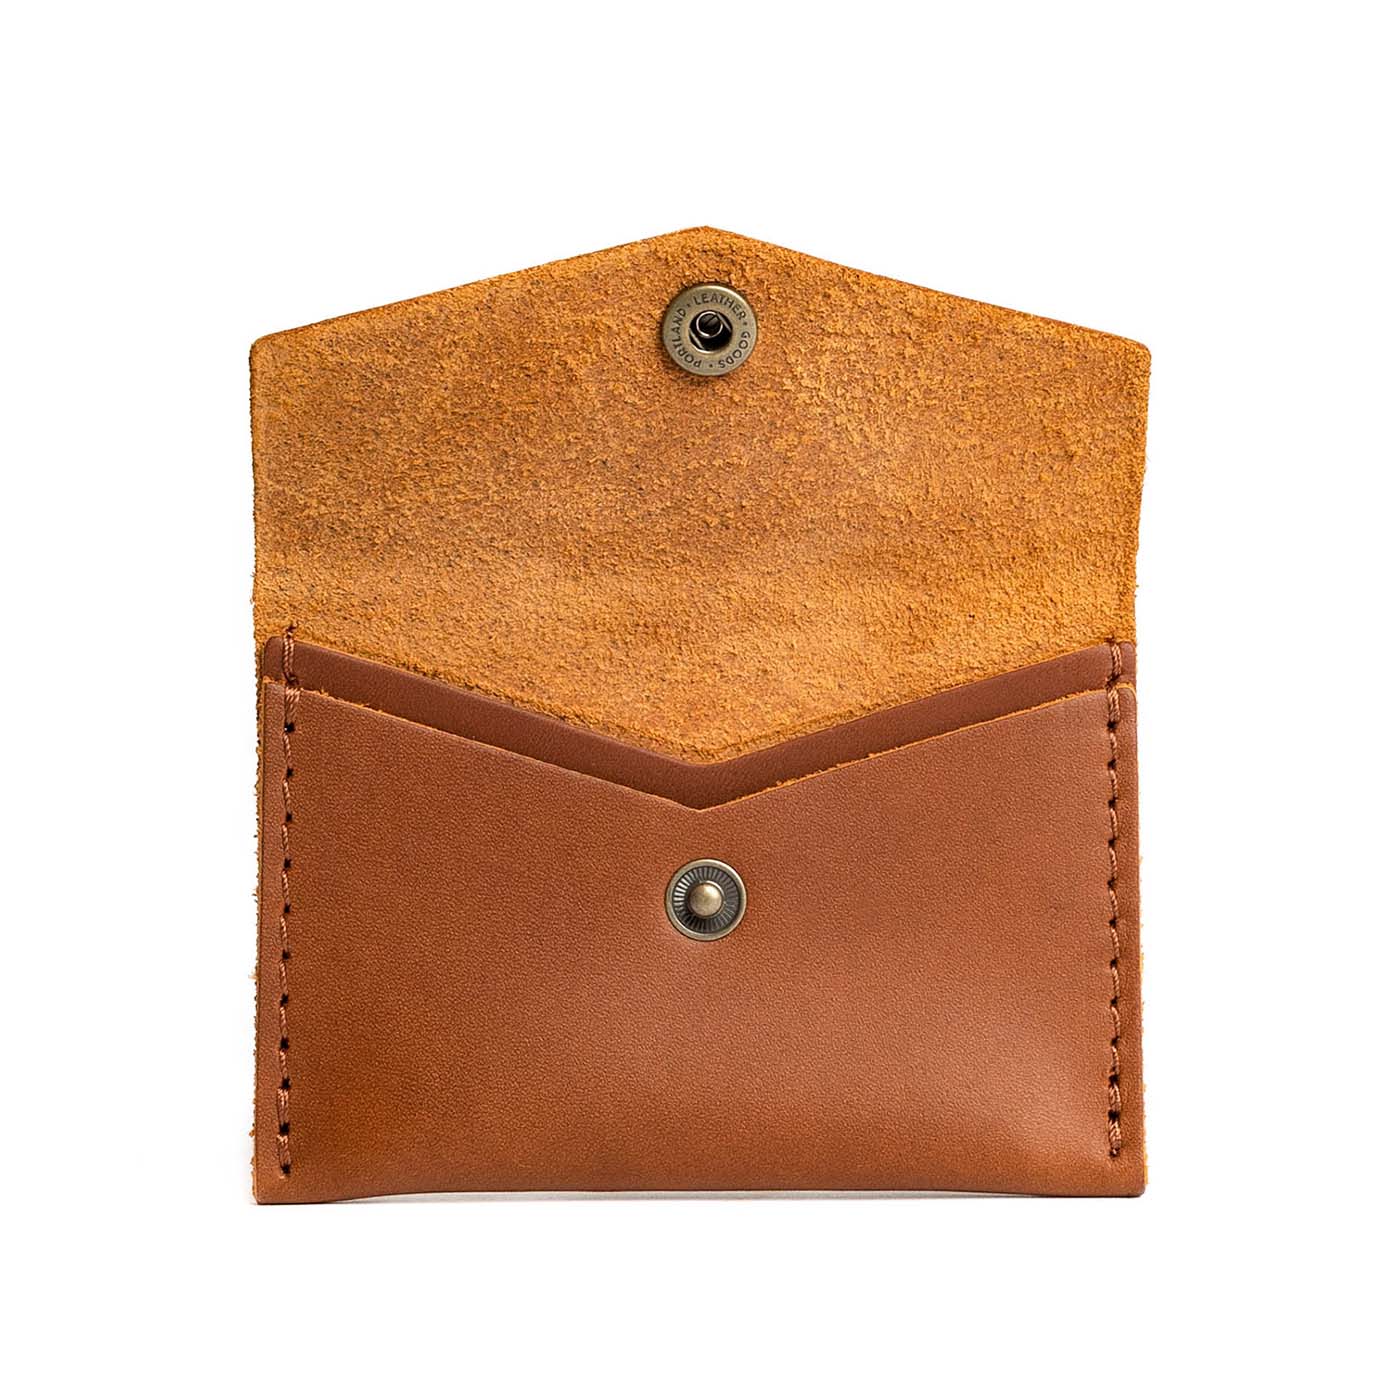 All Color: Honey | leather envelope card wallet